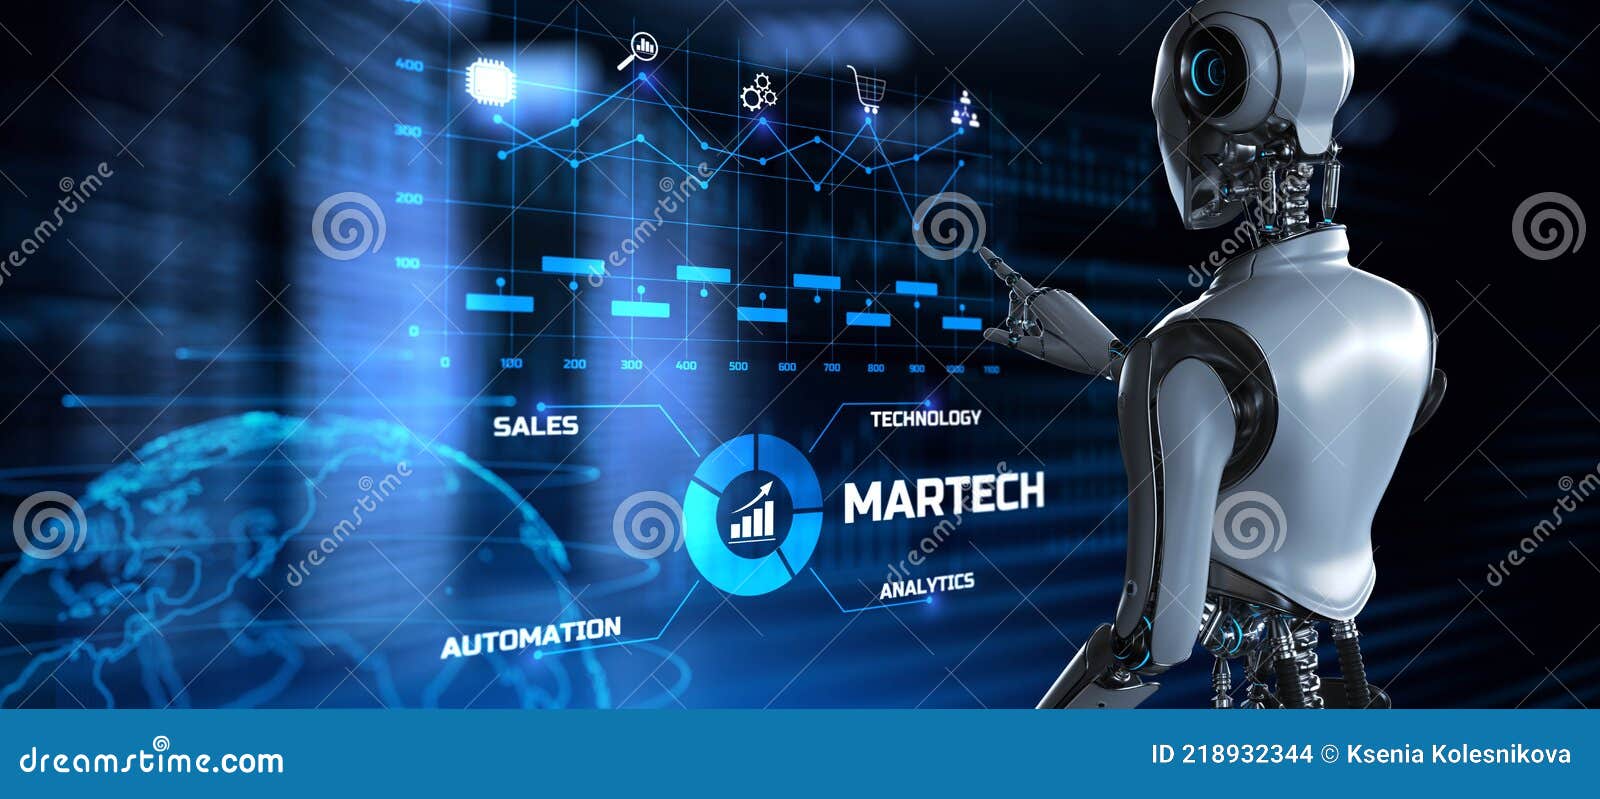 martech digital marketing automation technology concept. robot pressing button on screen 3d render